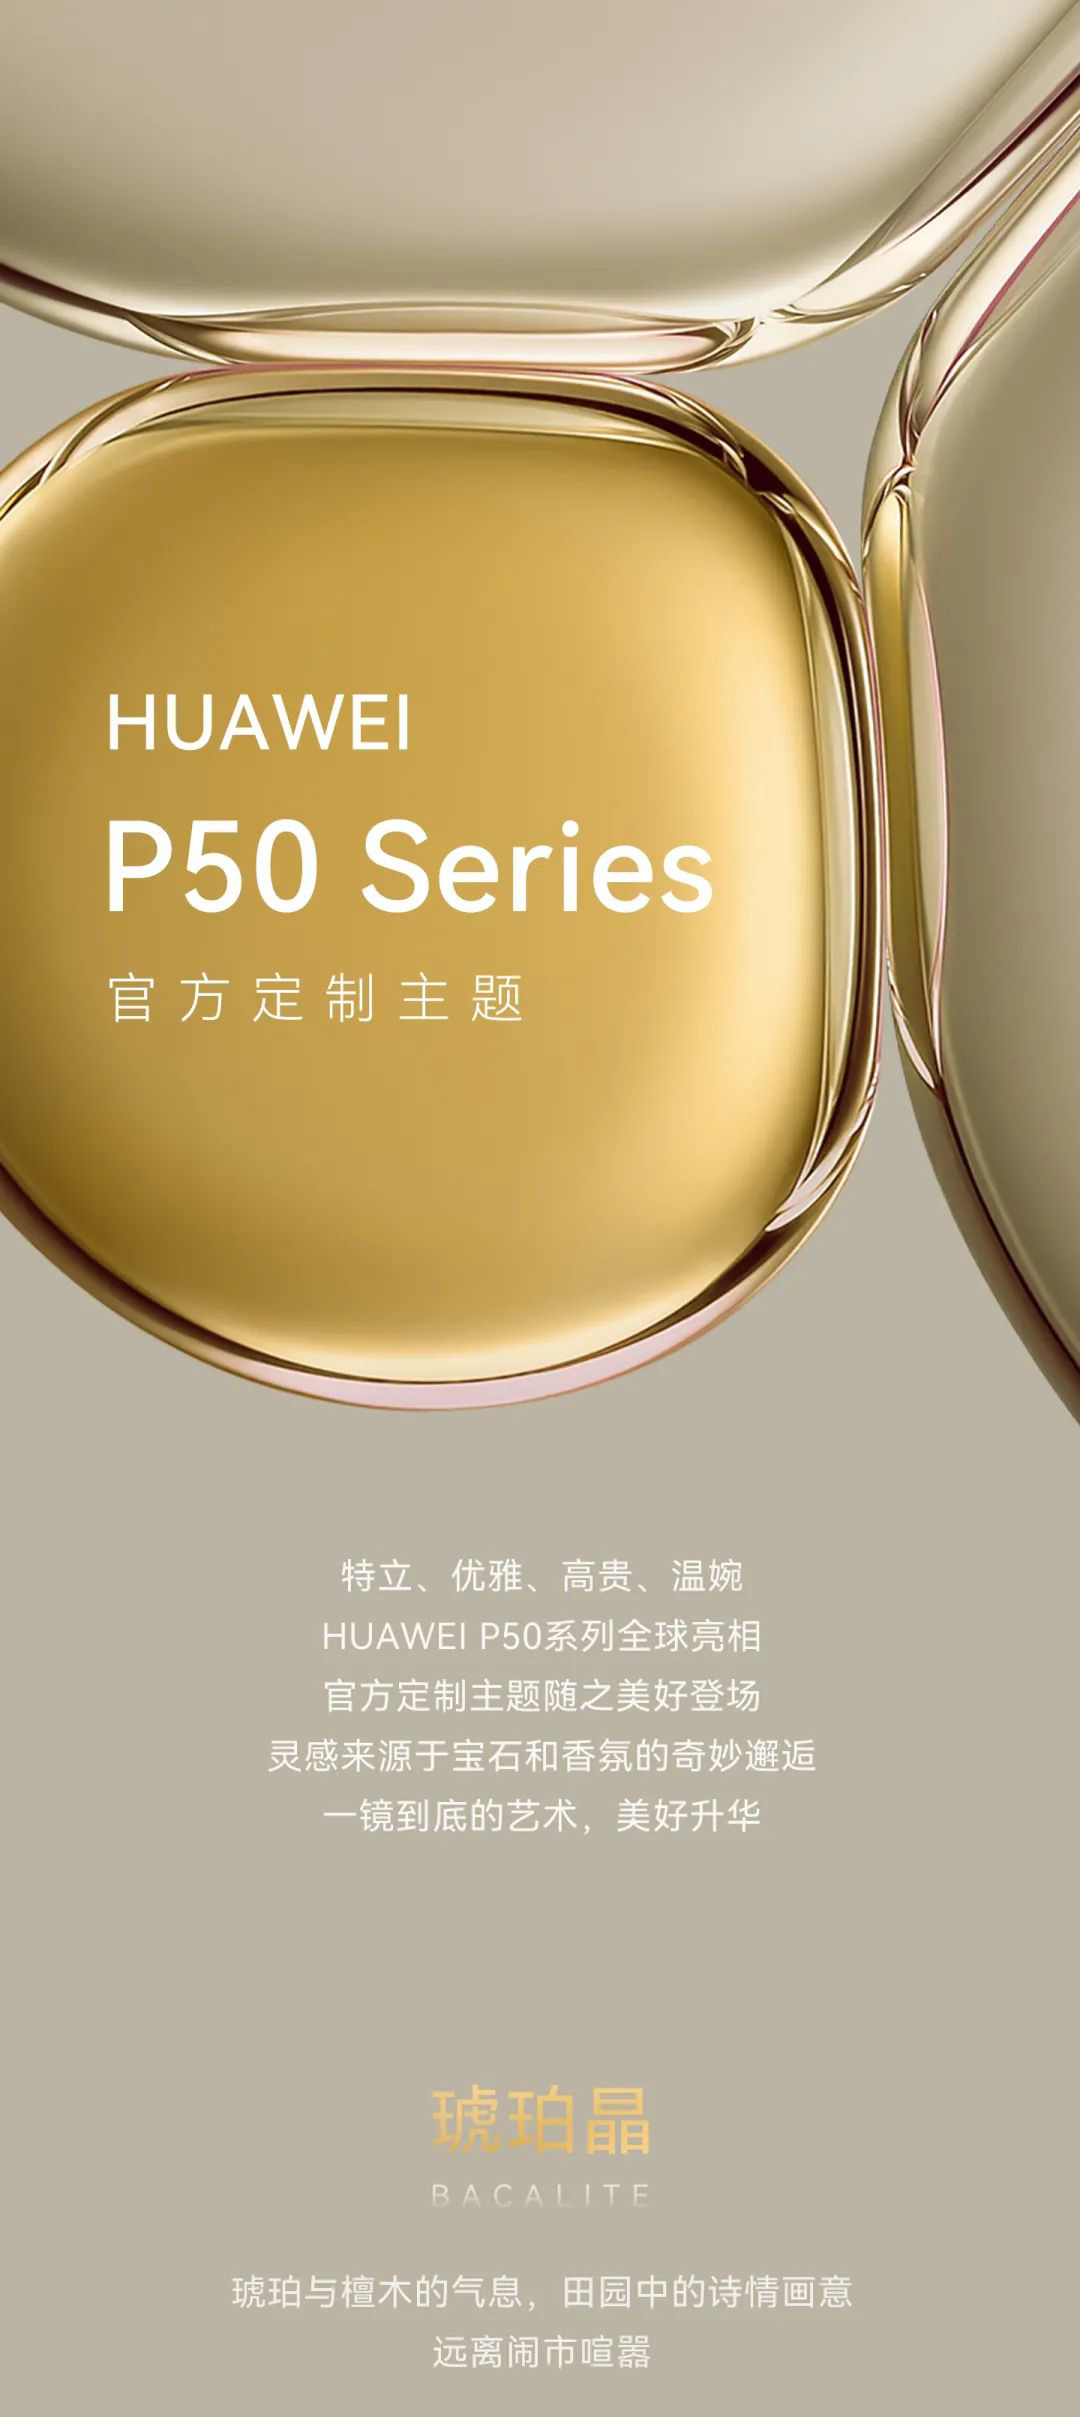 Huawei P50 Series Themes